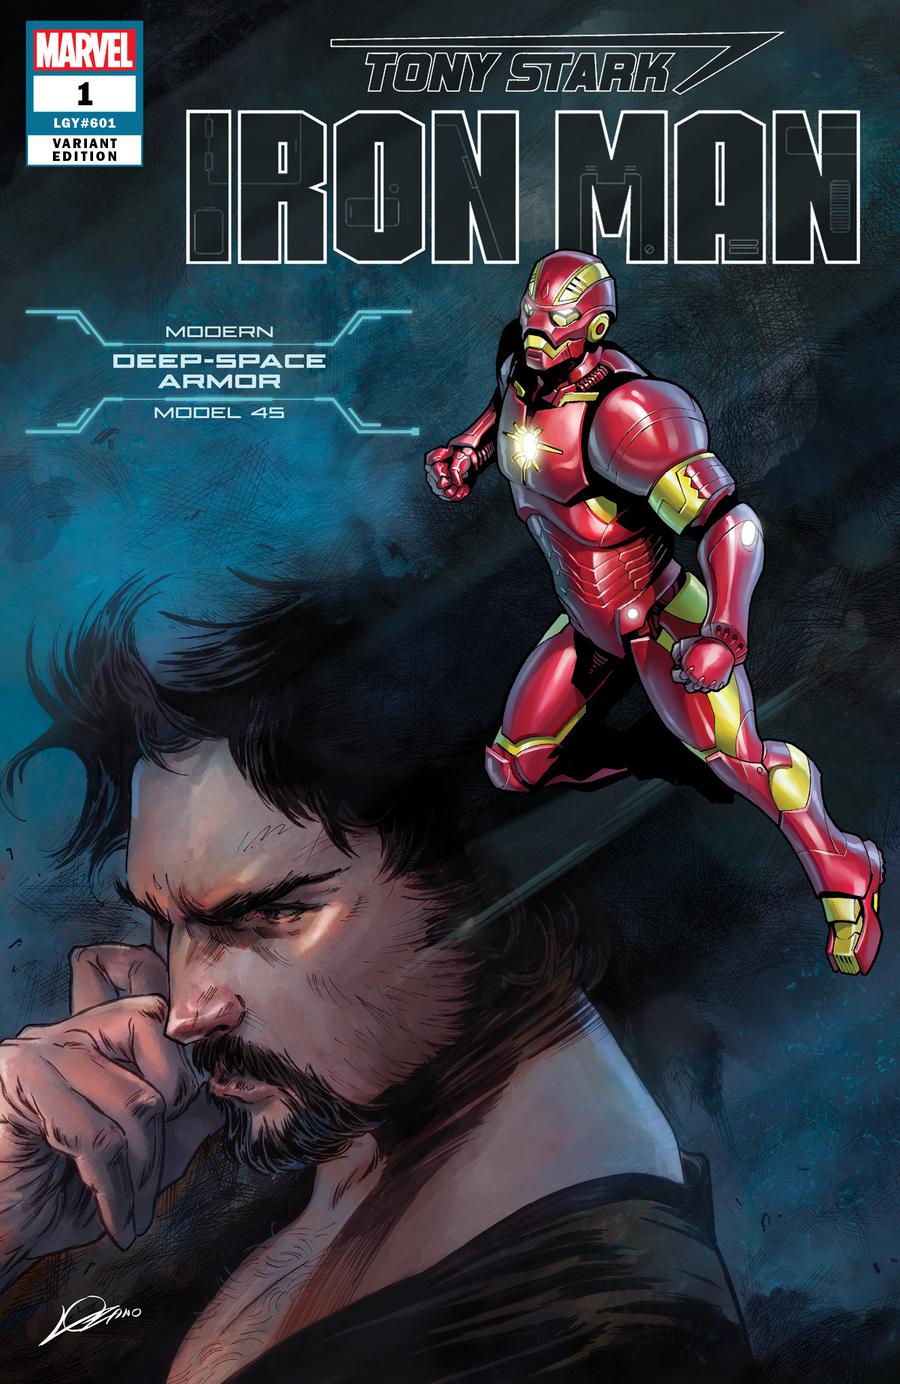 Tony Stark Iron Man #1 Cover G Variant Alexander Lozano & Valerio Schiti Model 45 Modern Deep-Space Armor Cover